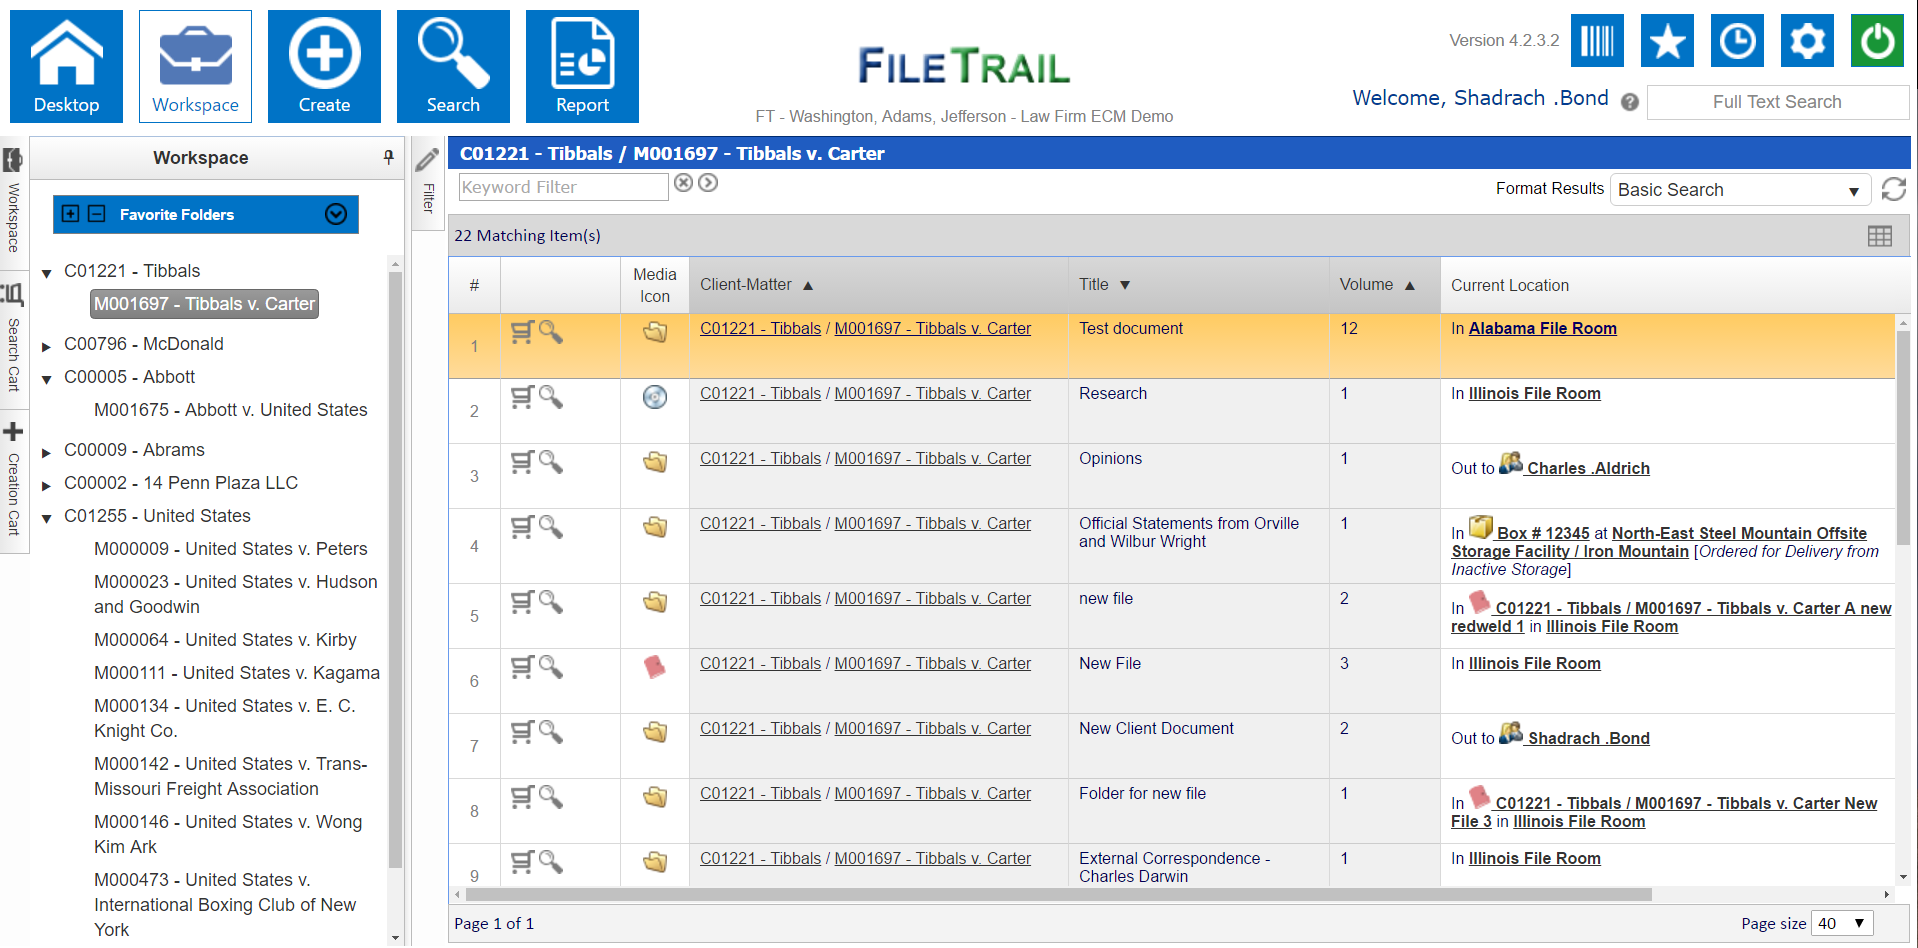 FileTrail records management system